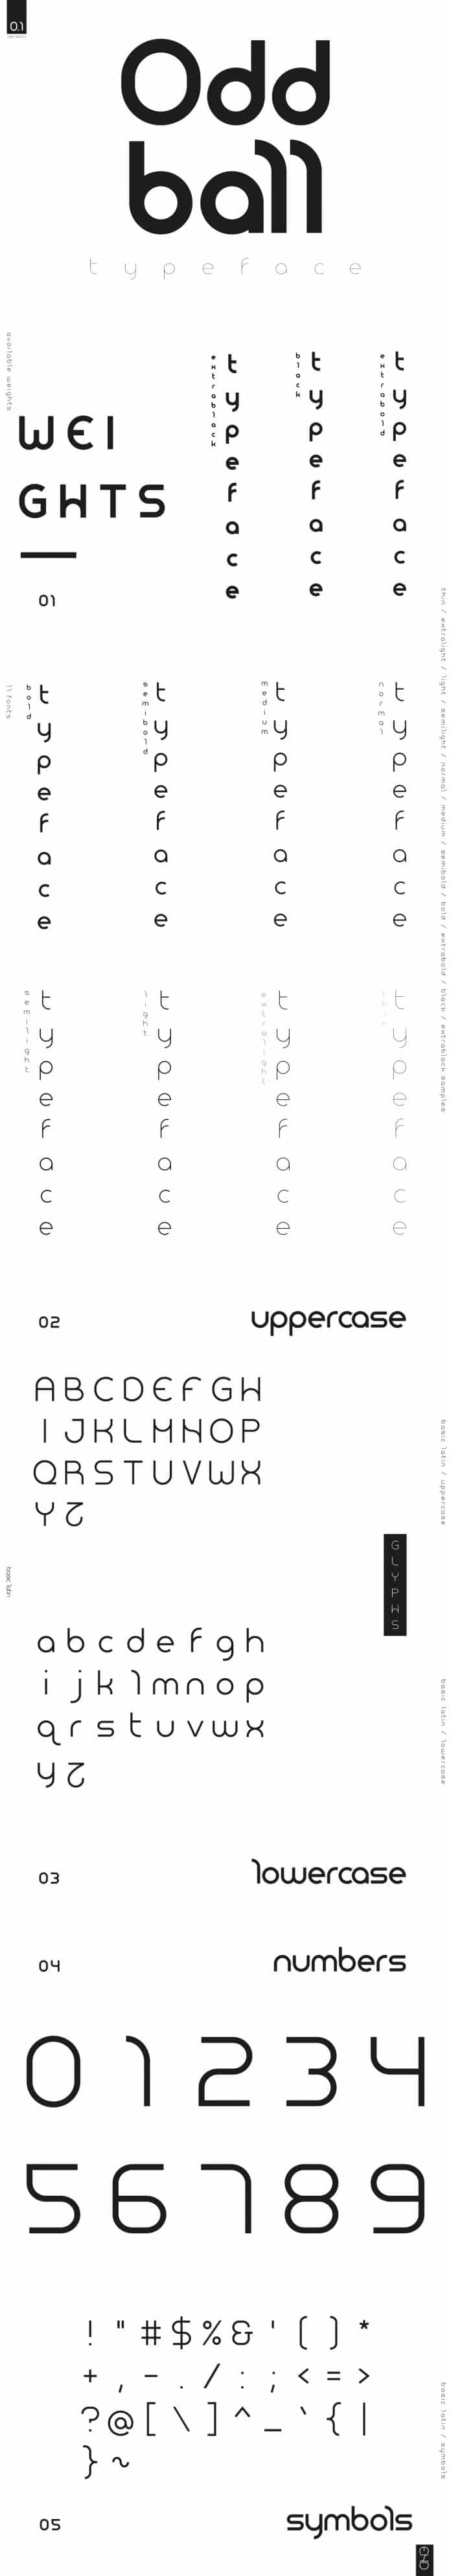 Oddball Typeface Font